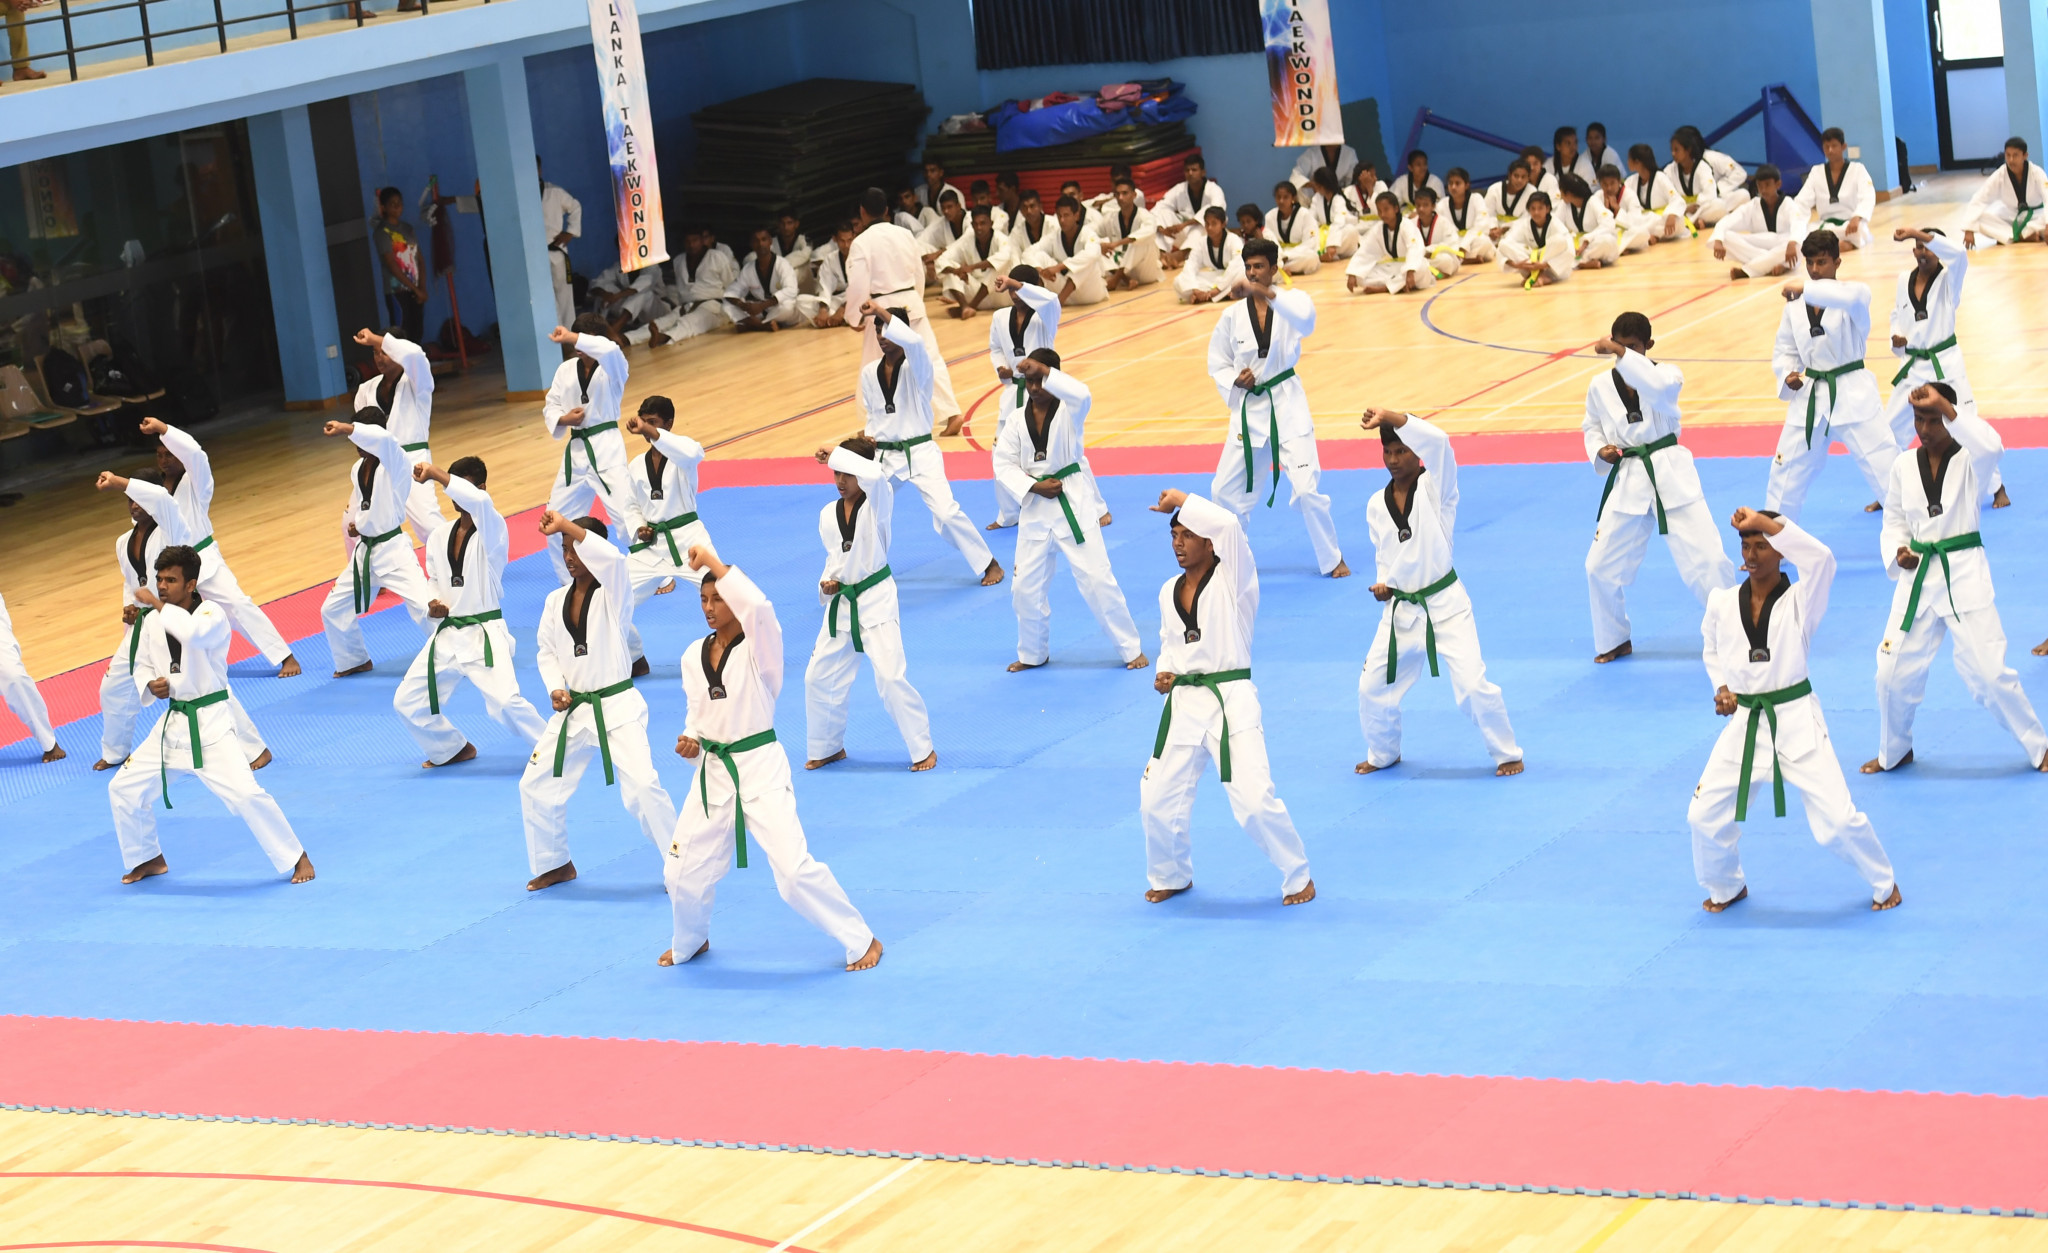 The Opening Ceremony of the World Taekwondo Cares project in Sri Lanka has taken place in Colombo ©World Taekwondo